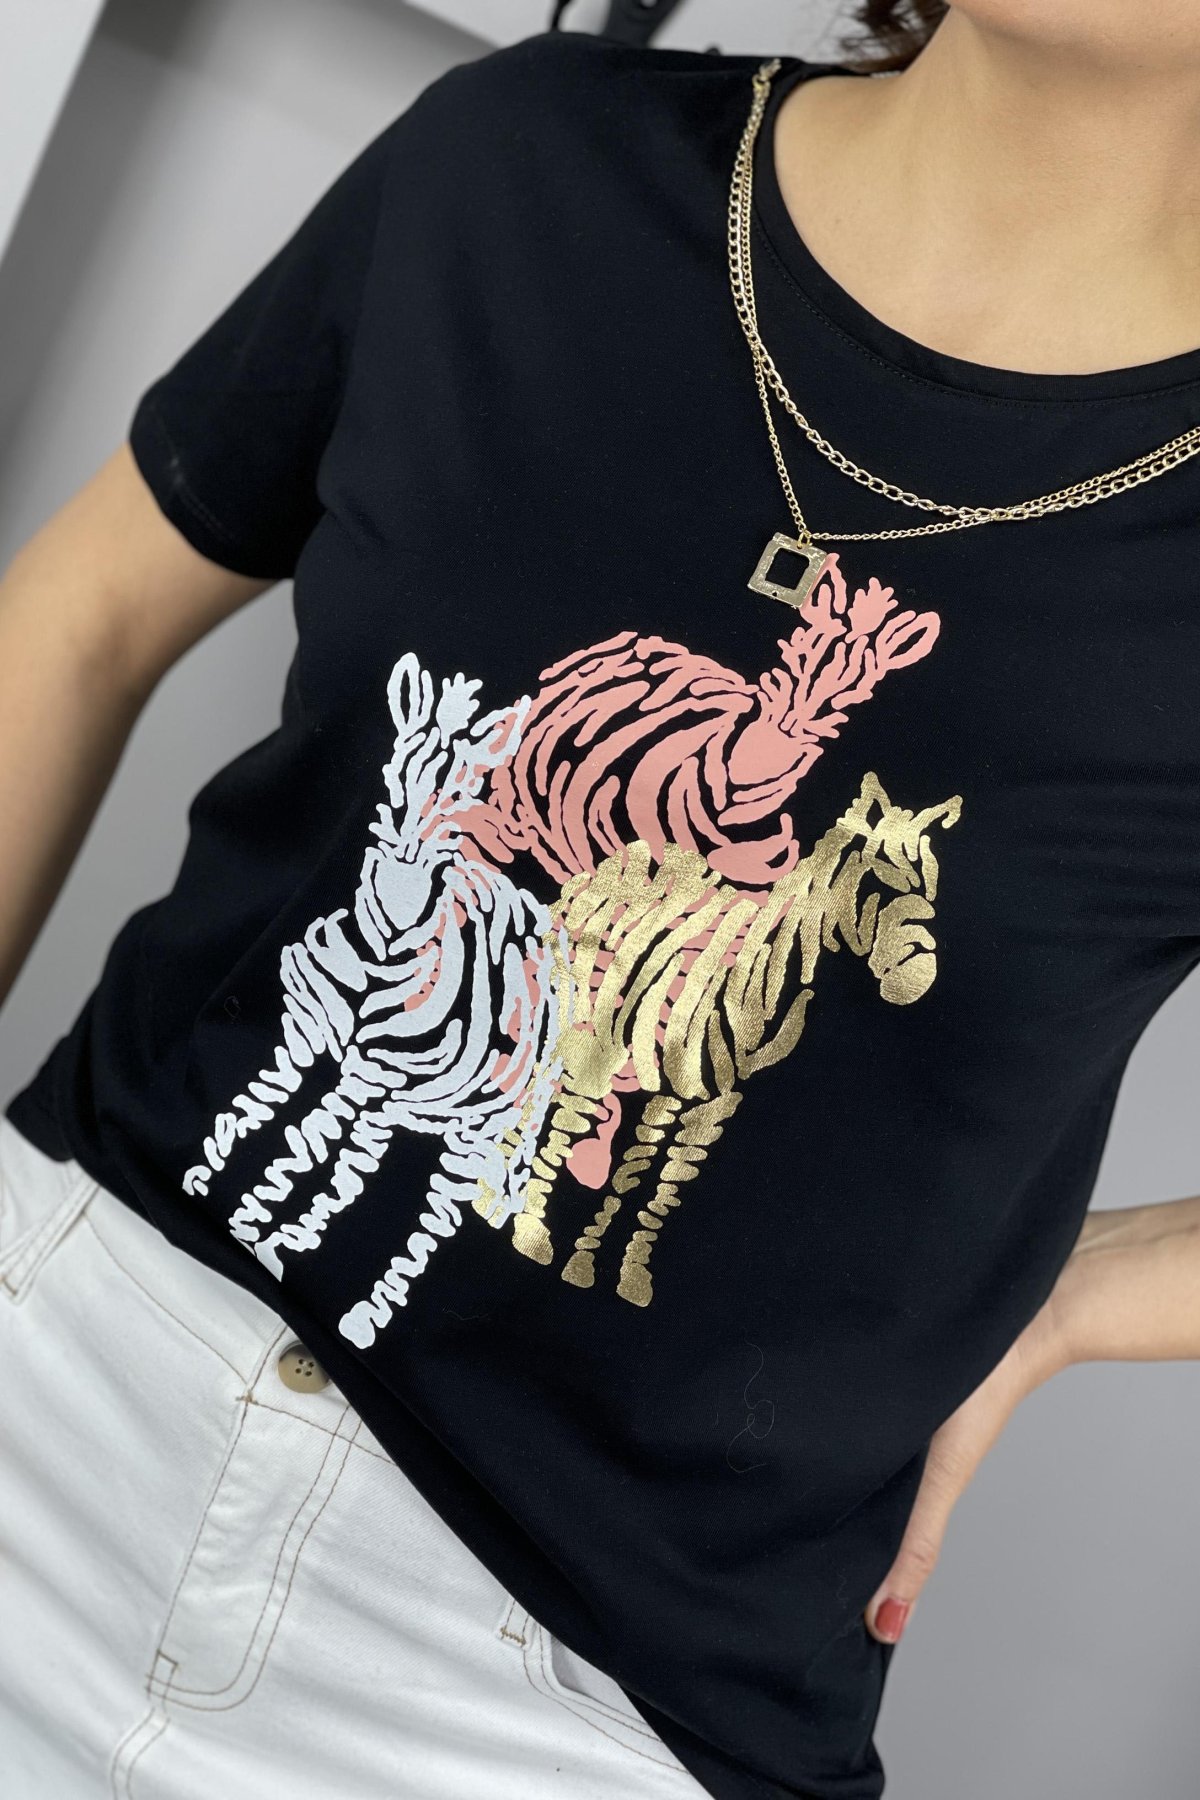 Üç Zebra Baskı T-shirt 